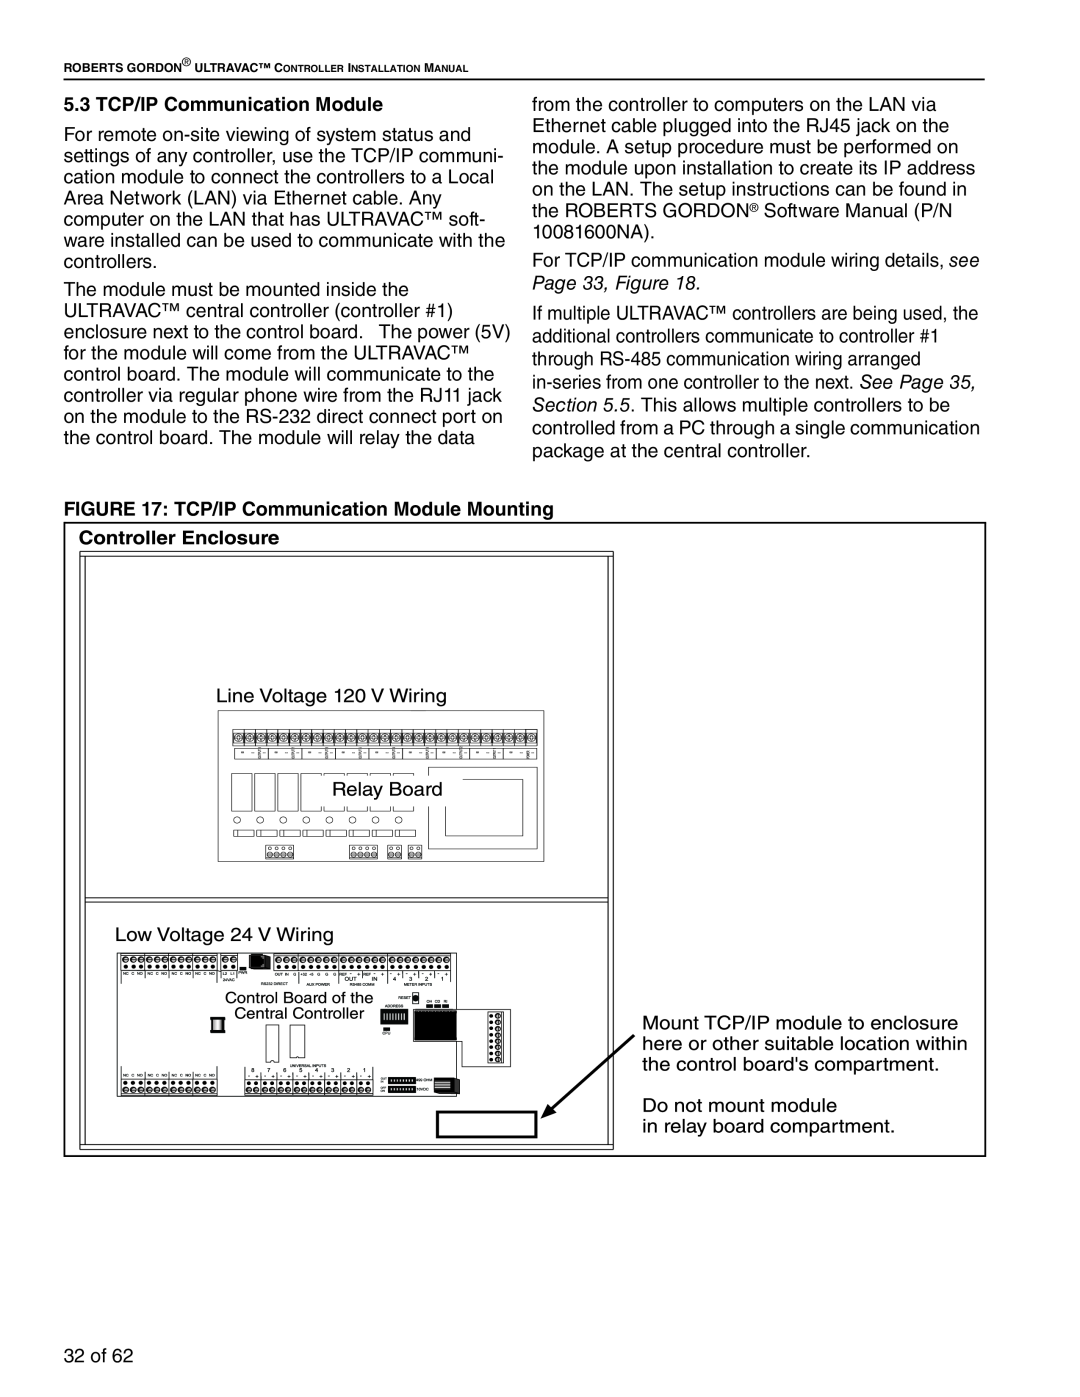 Roberts Gorden 10081601NA Rev H 12/11 service manual 5.3 TCP/IP Communication Module, TCP/IP Communication Module Mounting 